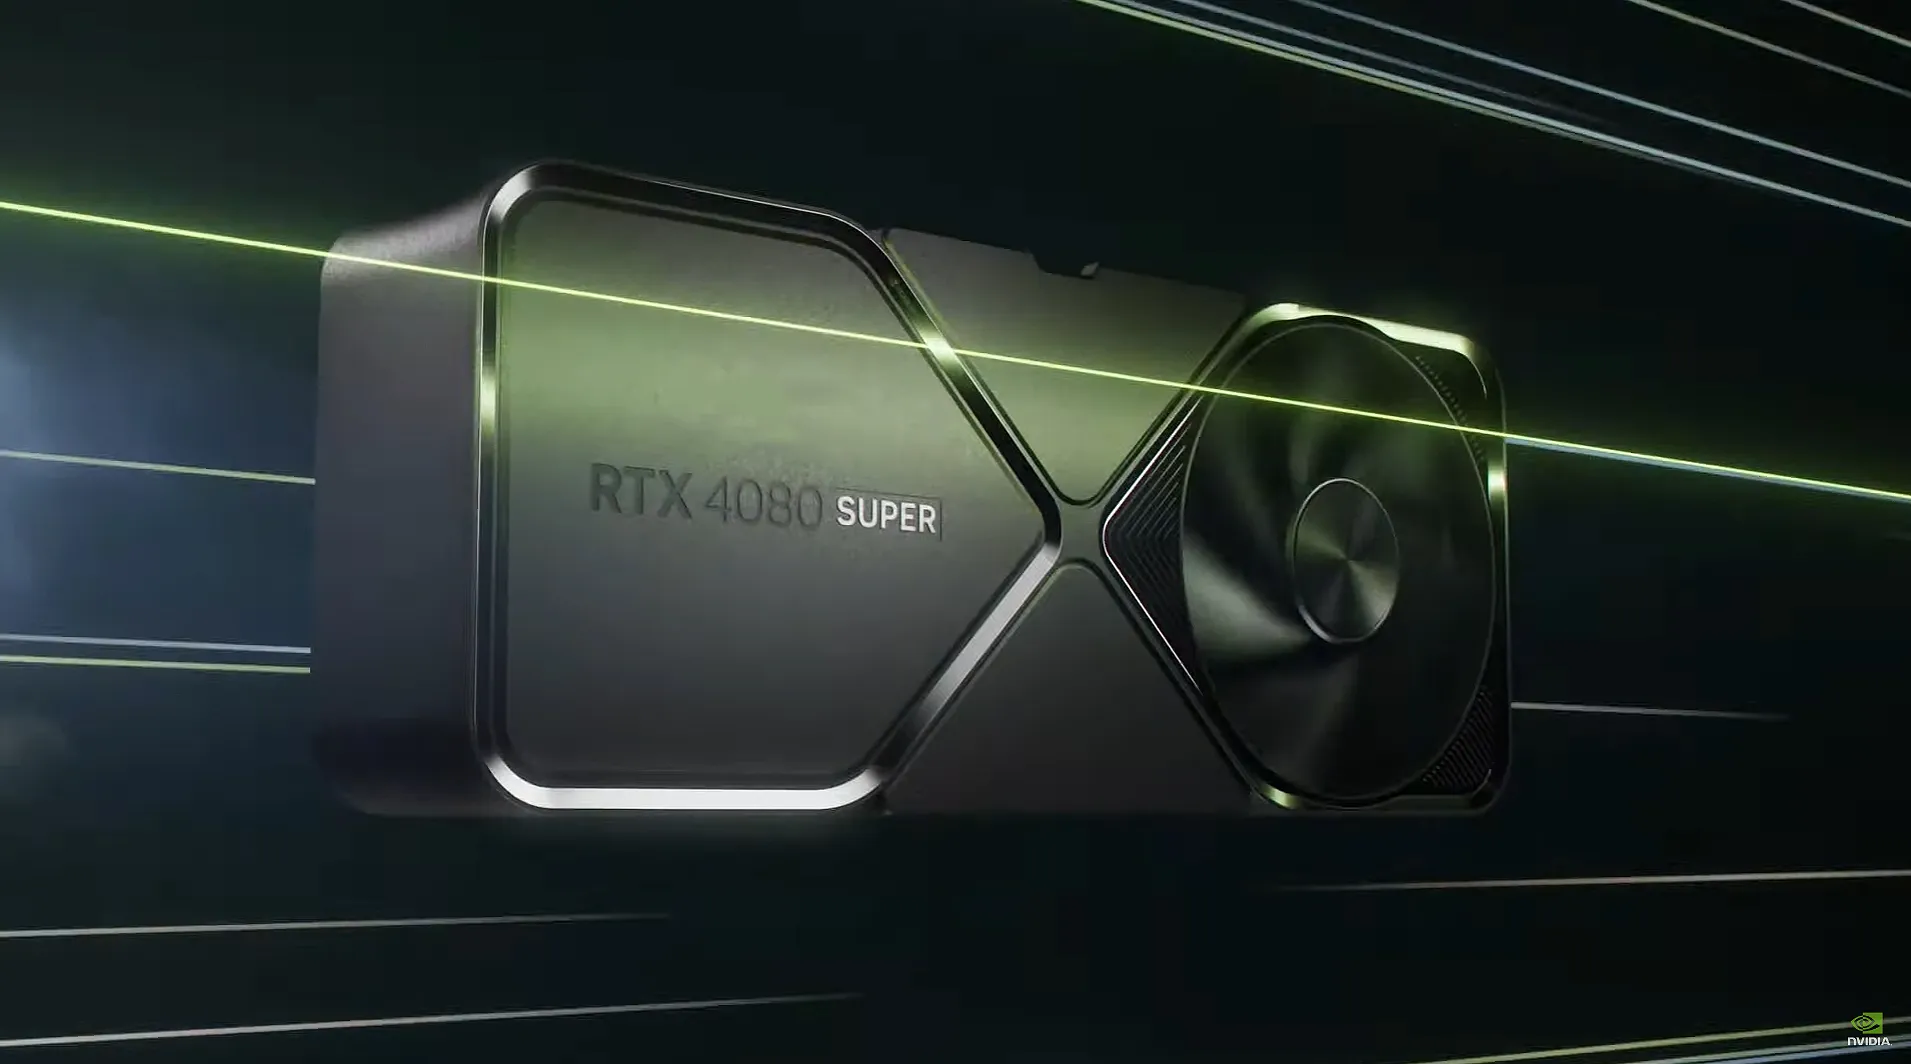 Nvidia RTX 4080 Super